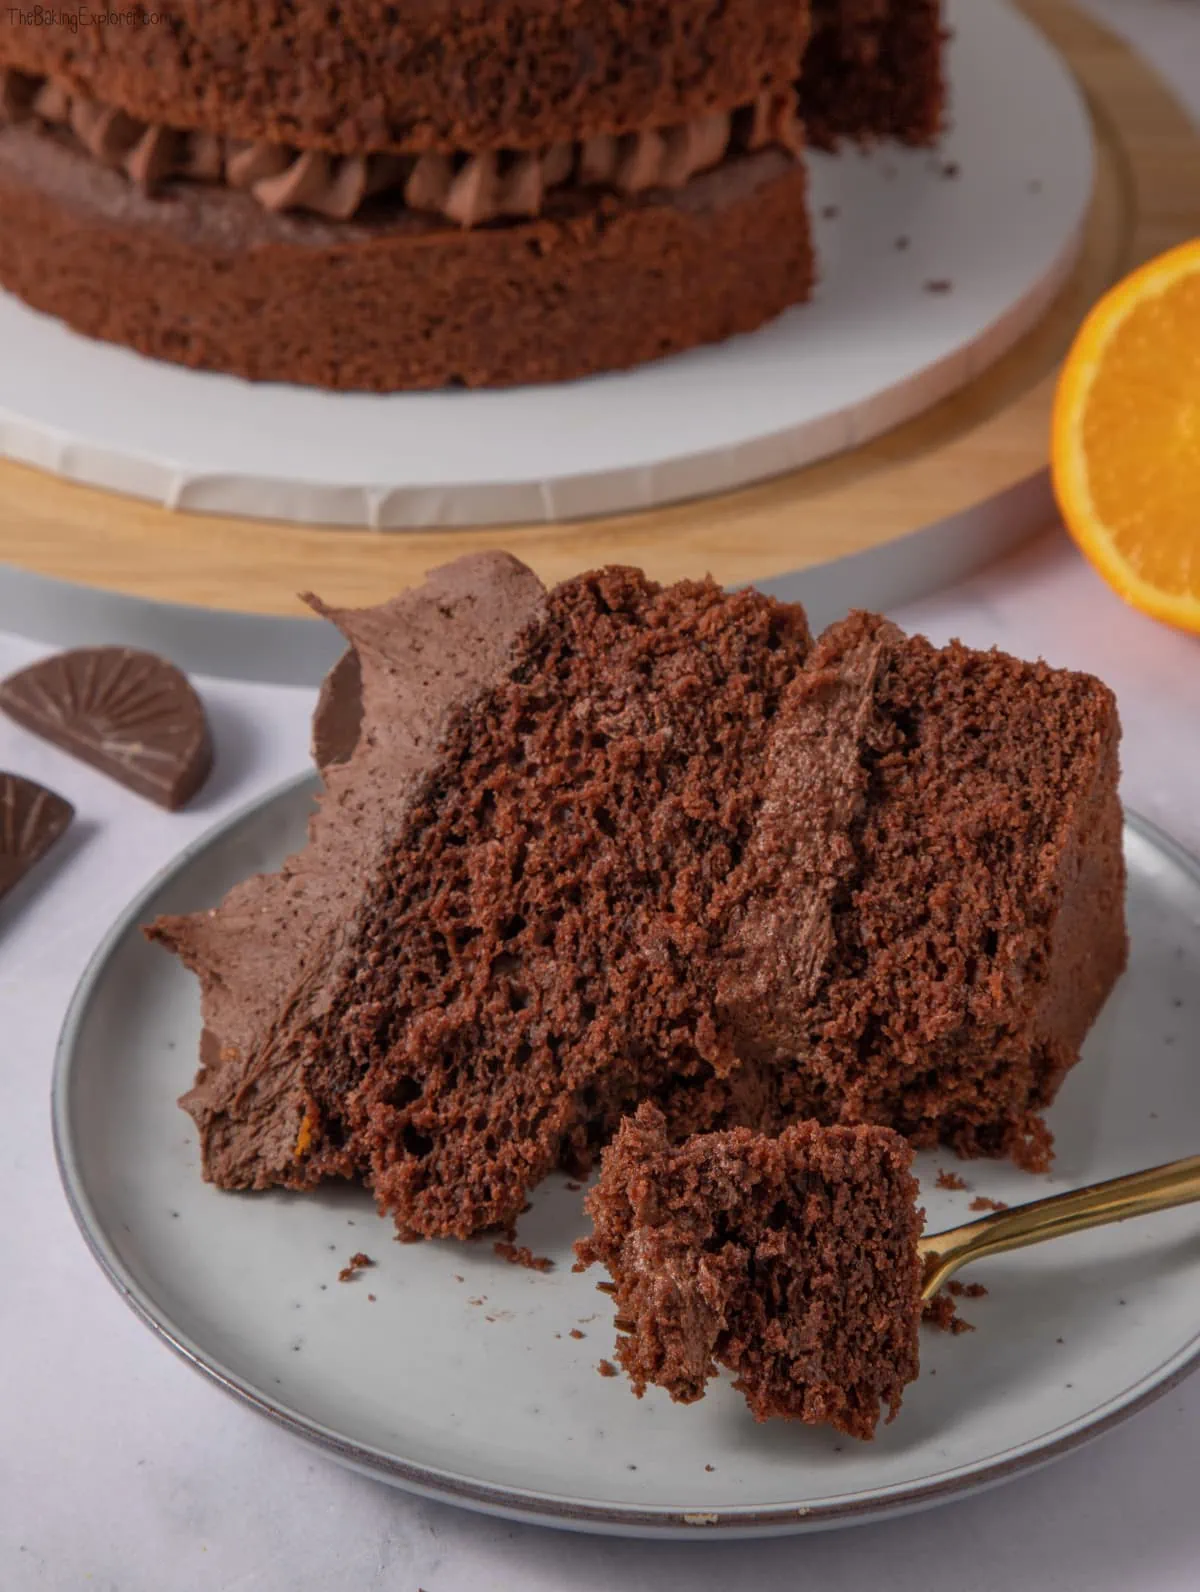 Vegan Chocolate Orange Cake